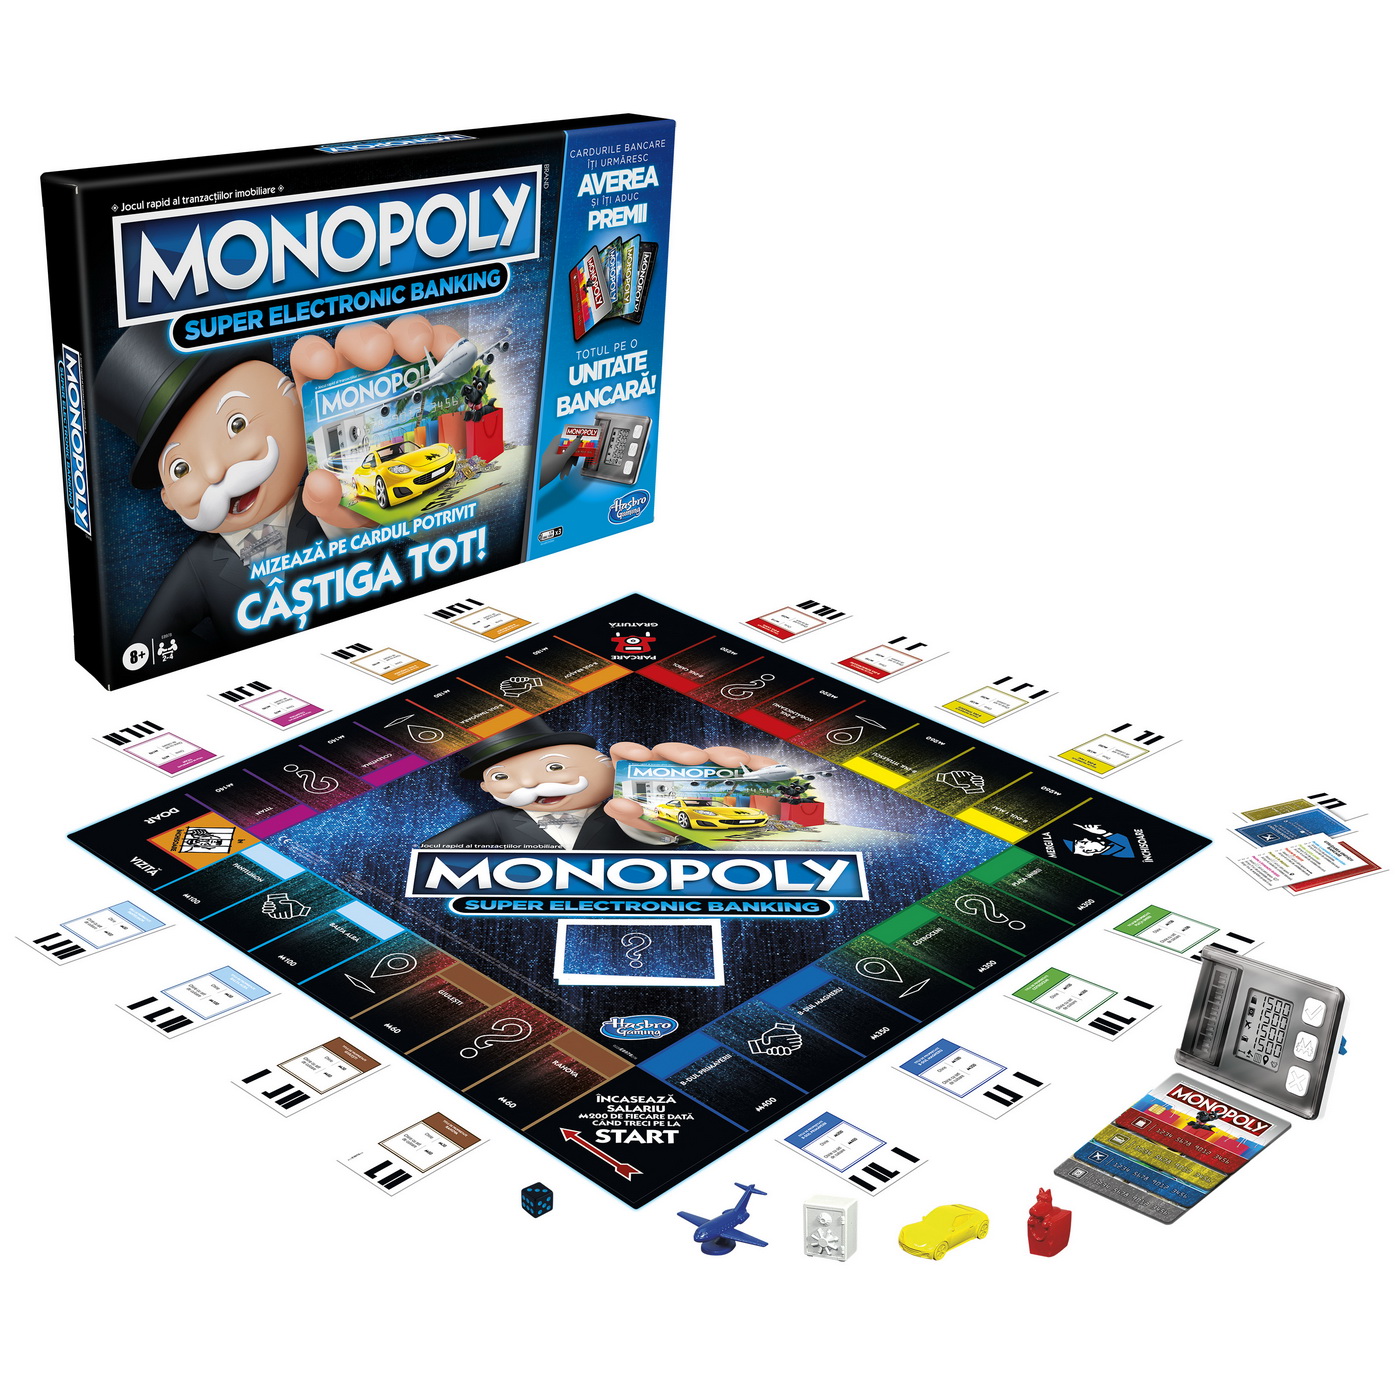 Monopoly Super Electronic Banking - castiga tot!